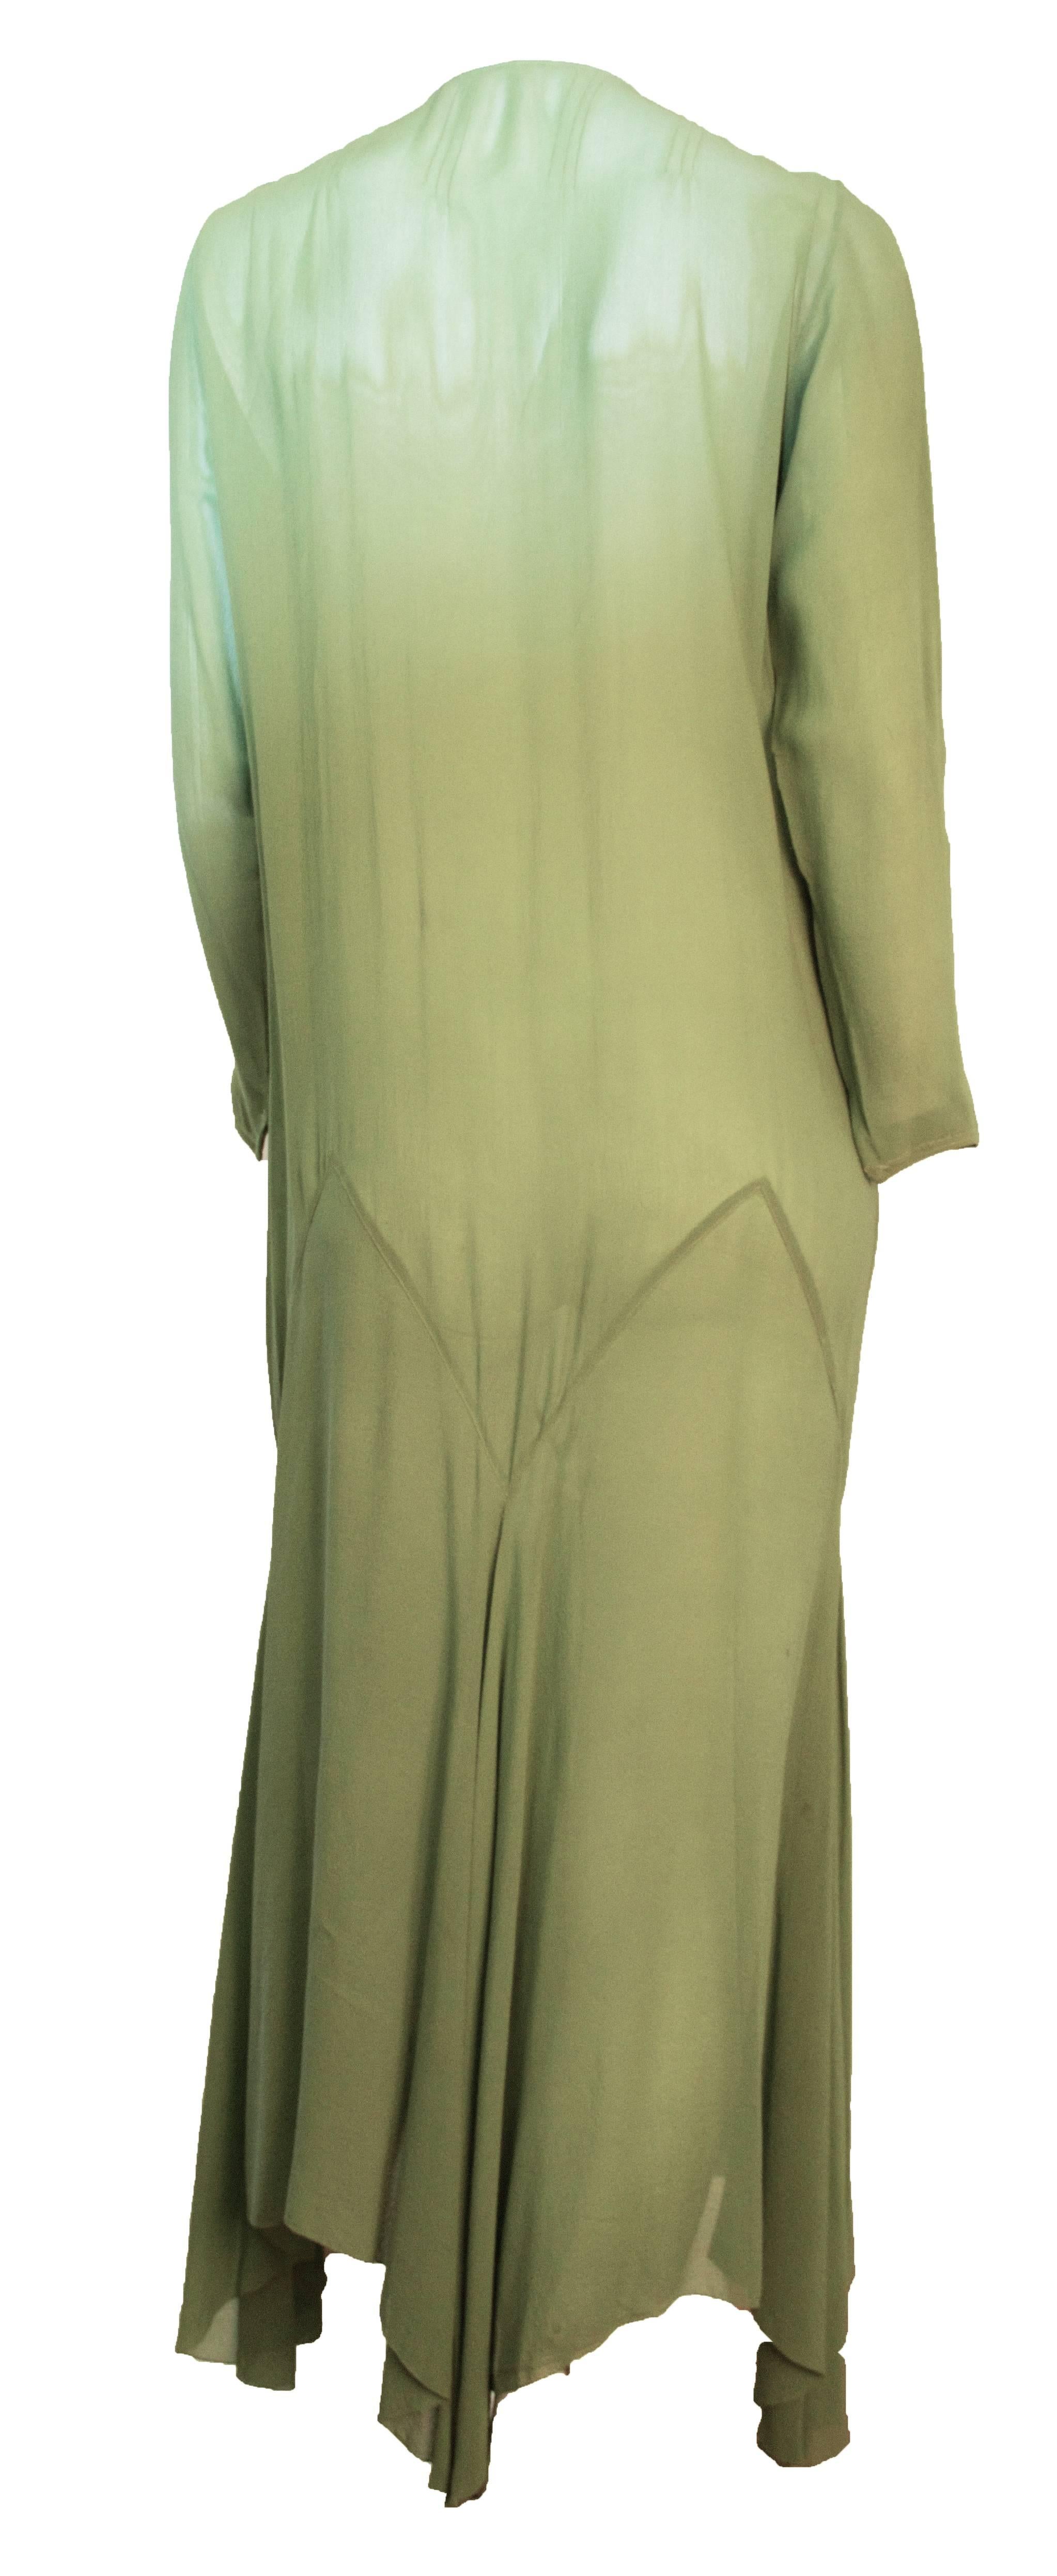 20s trompe l'ceil long sleeved moss green chiffon dress with a handkerchief hemline. Beaded trim along front neckline. 